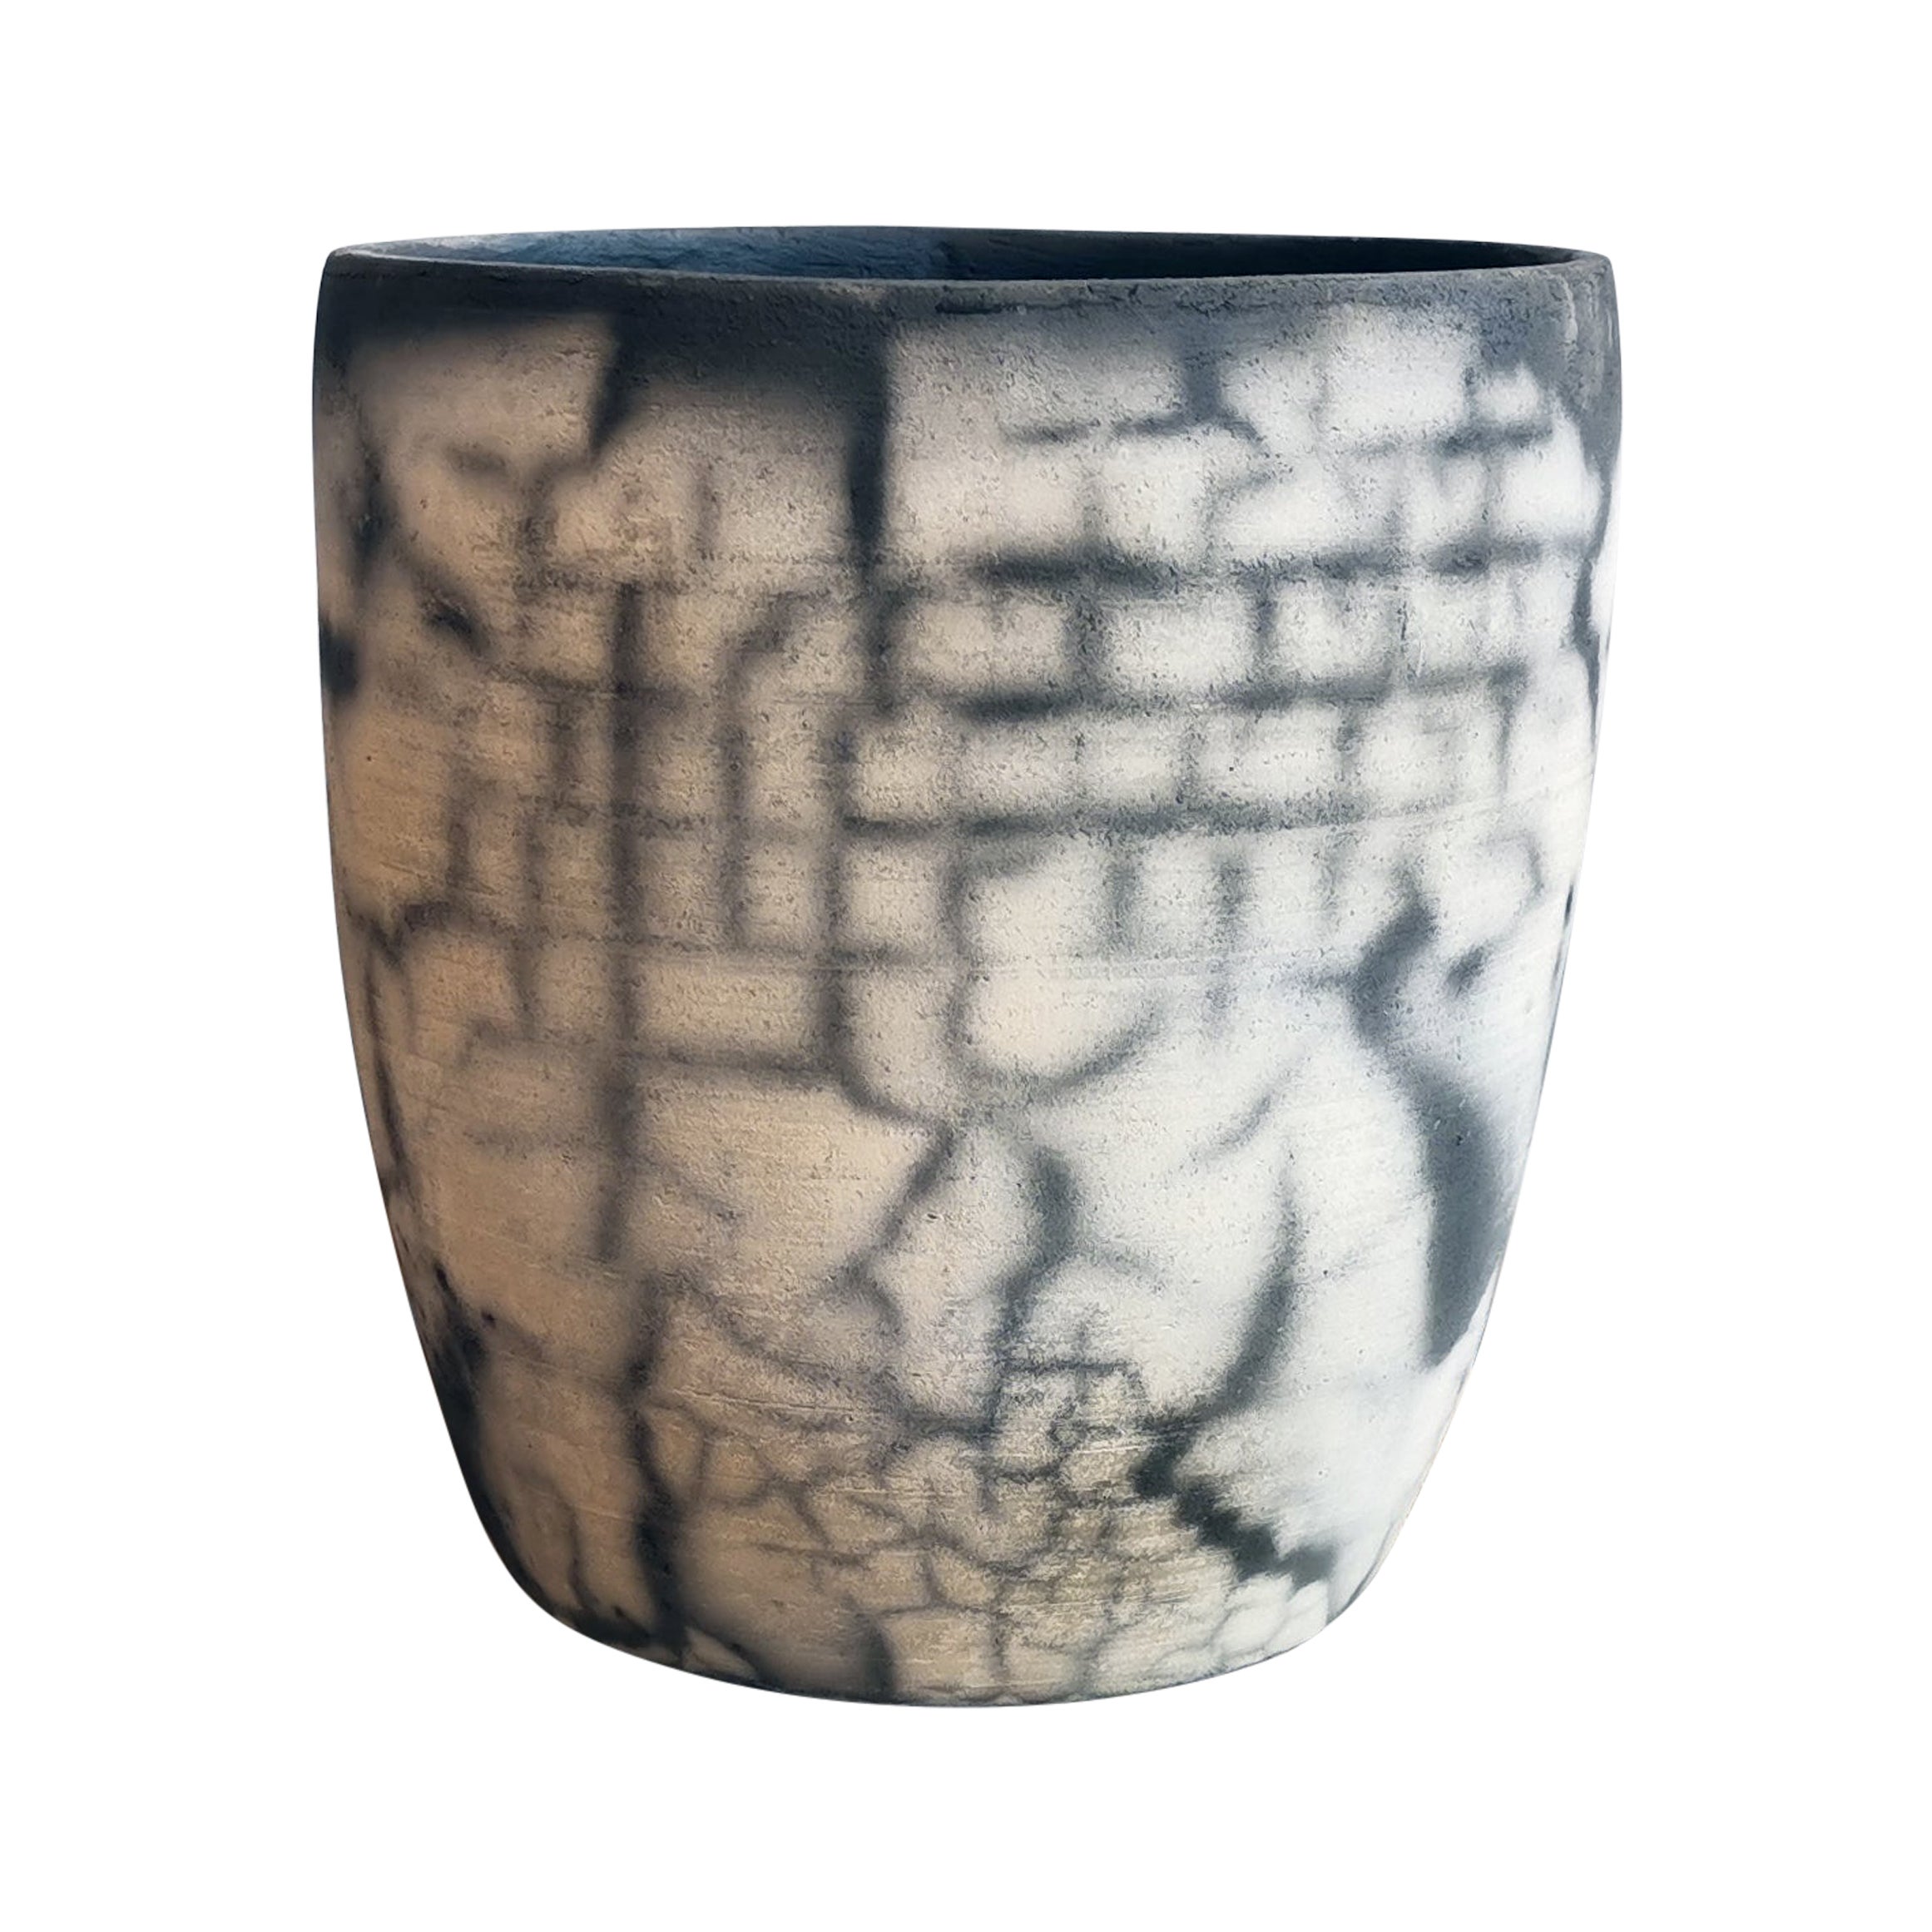 Pot de jardinière Seicho Raku Poterie - Raku fumé - Céramique artisanale